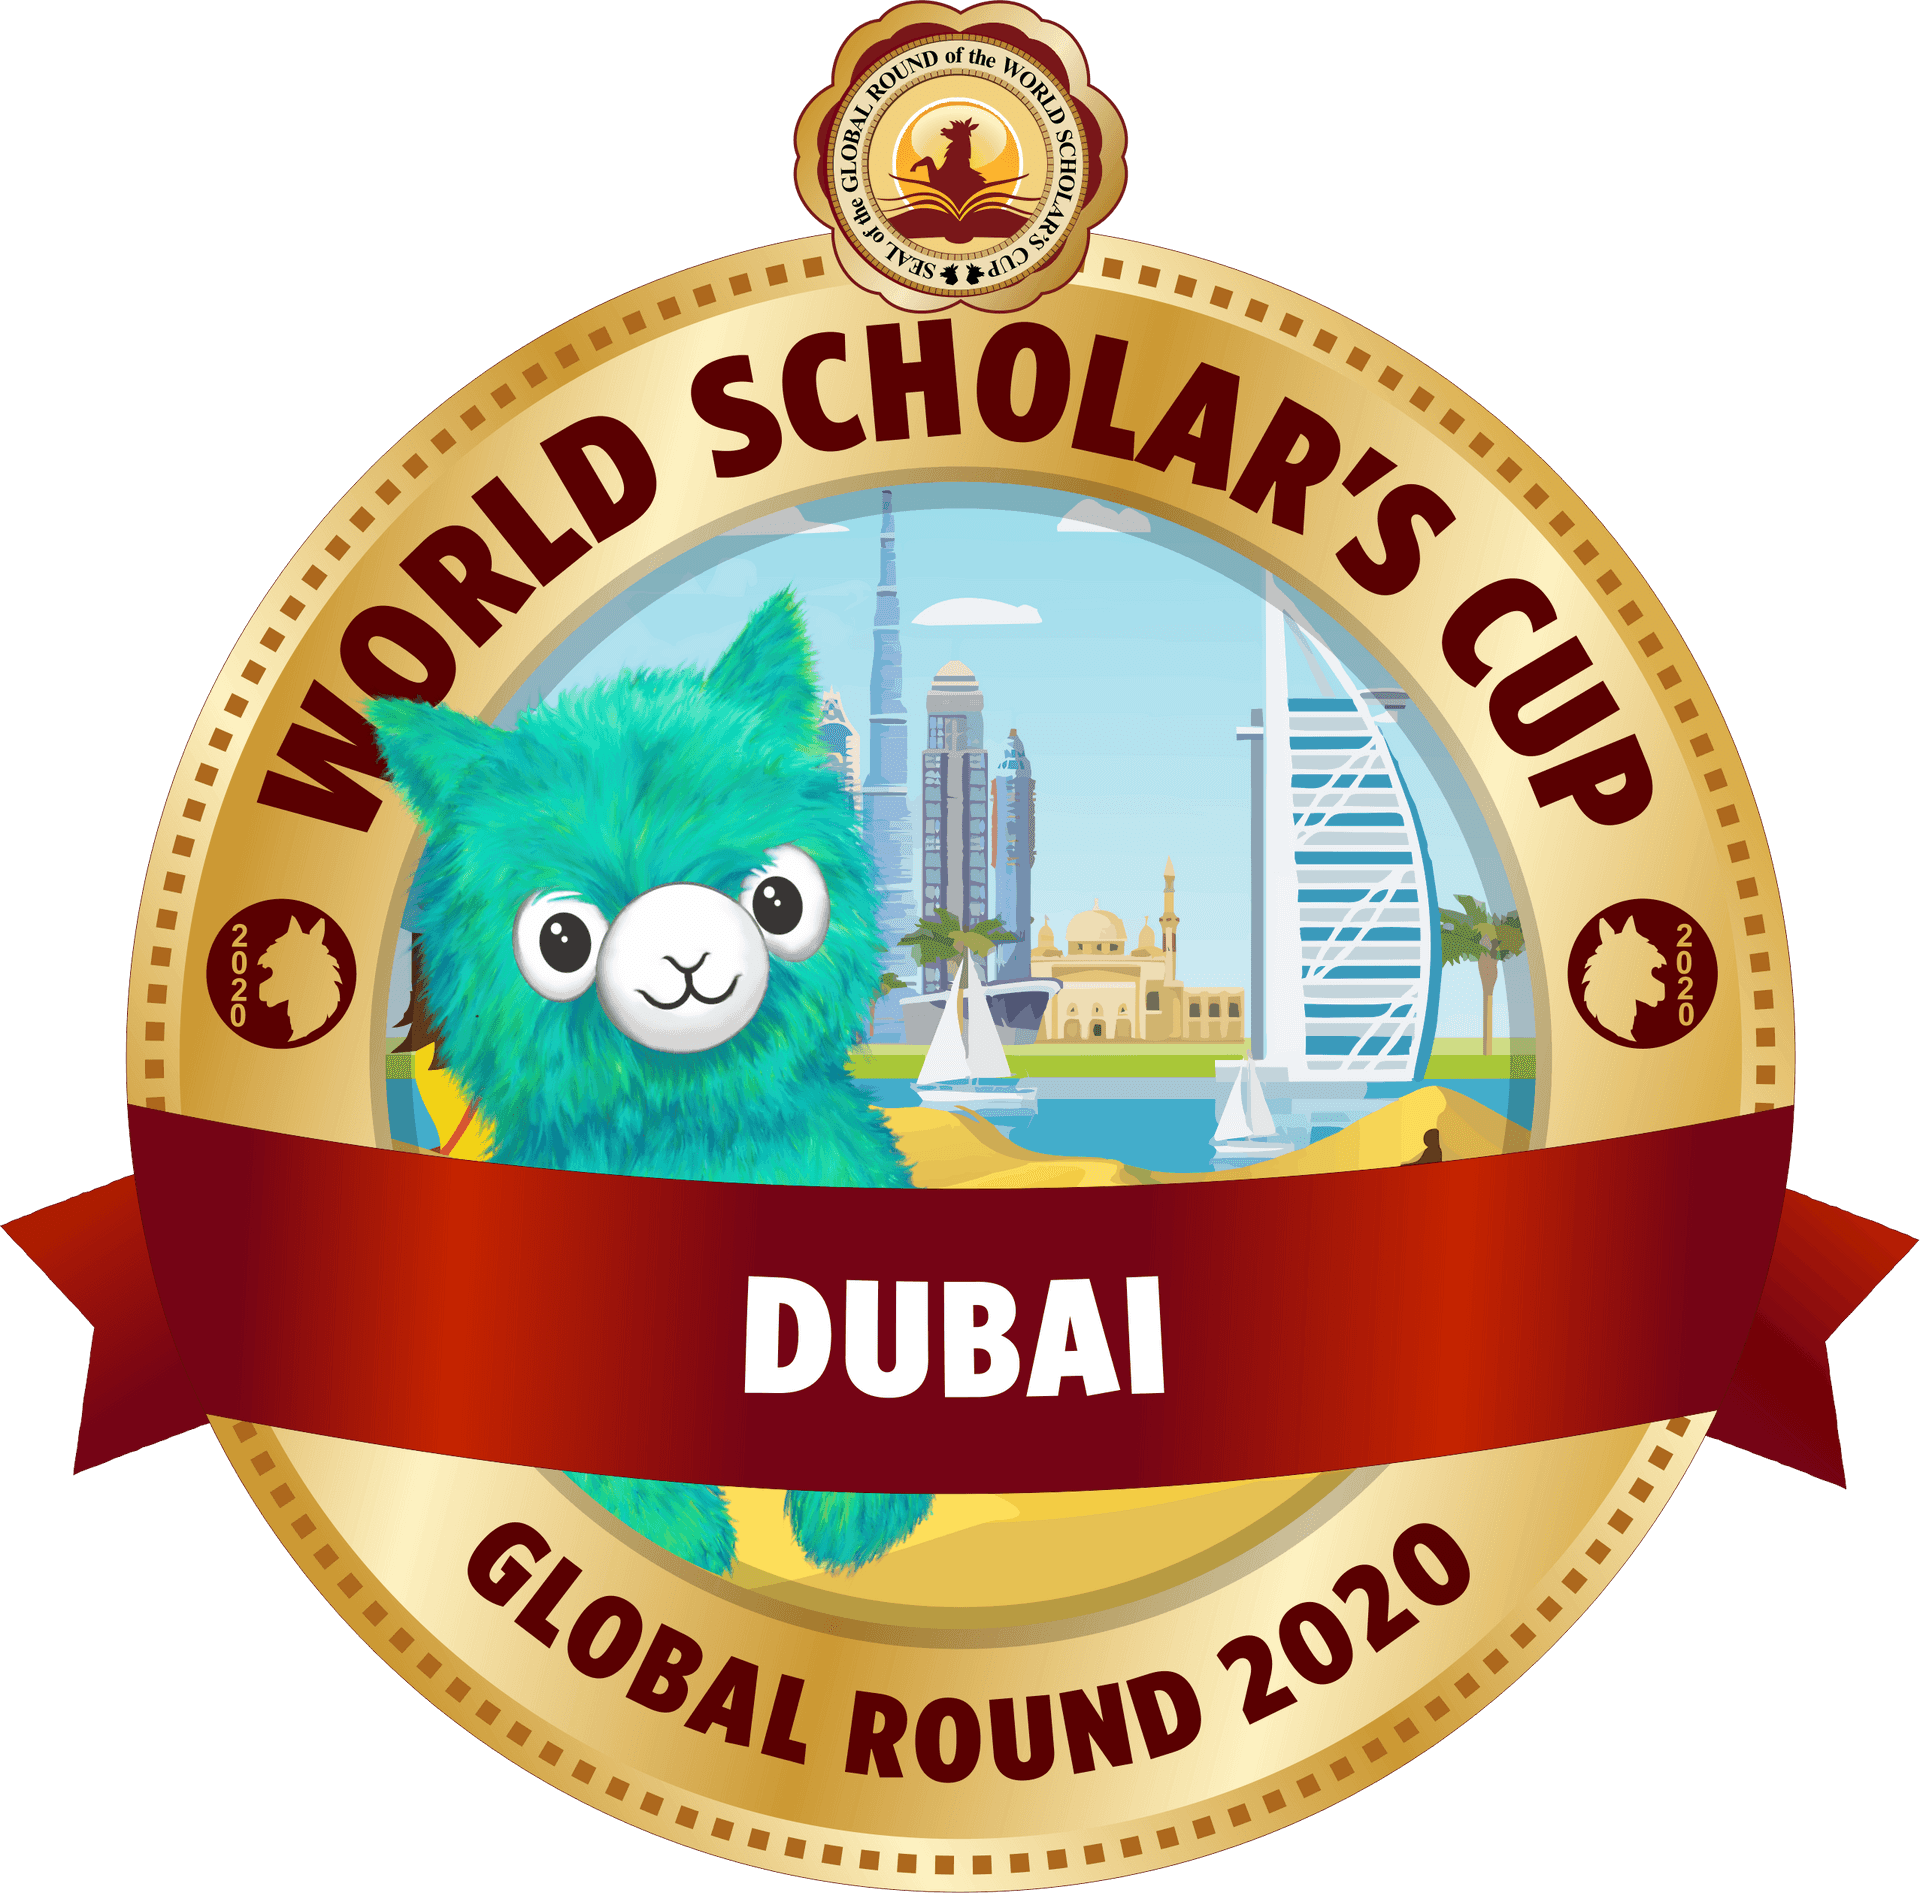 World Scholars Cup Dubai Global Round2020 Badge PNG